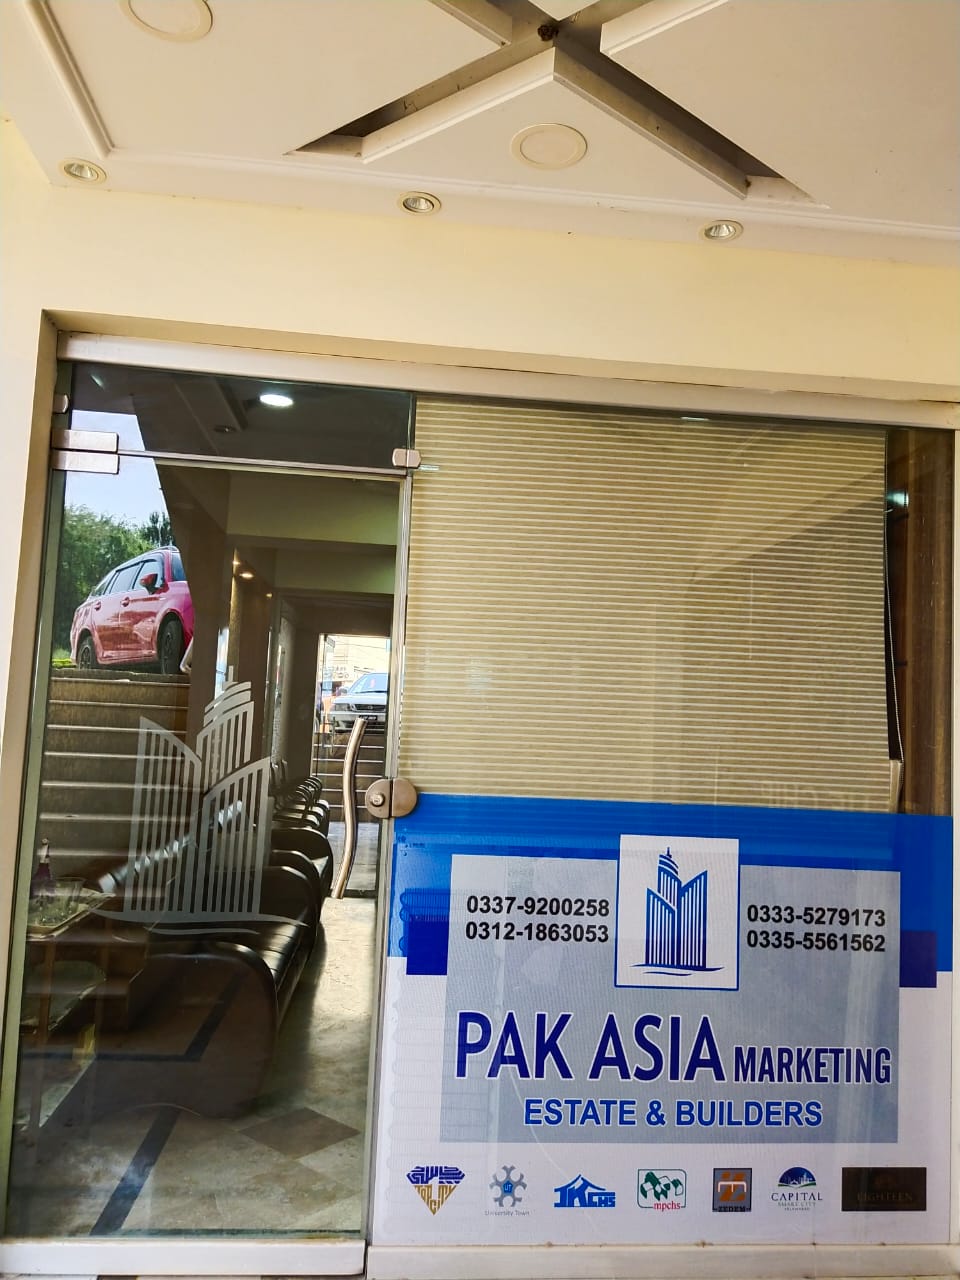 Pak Asia Marketing